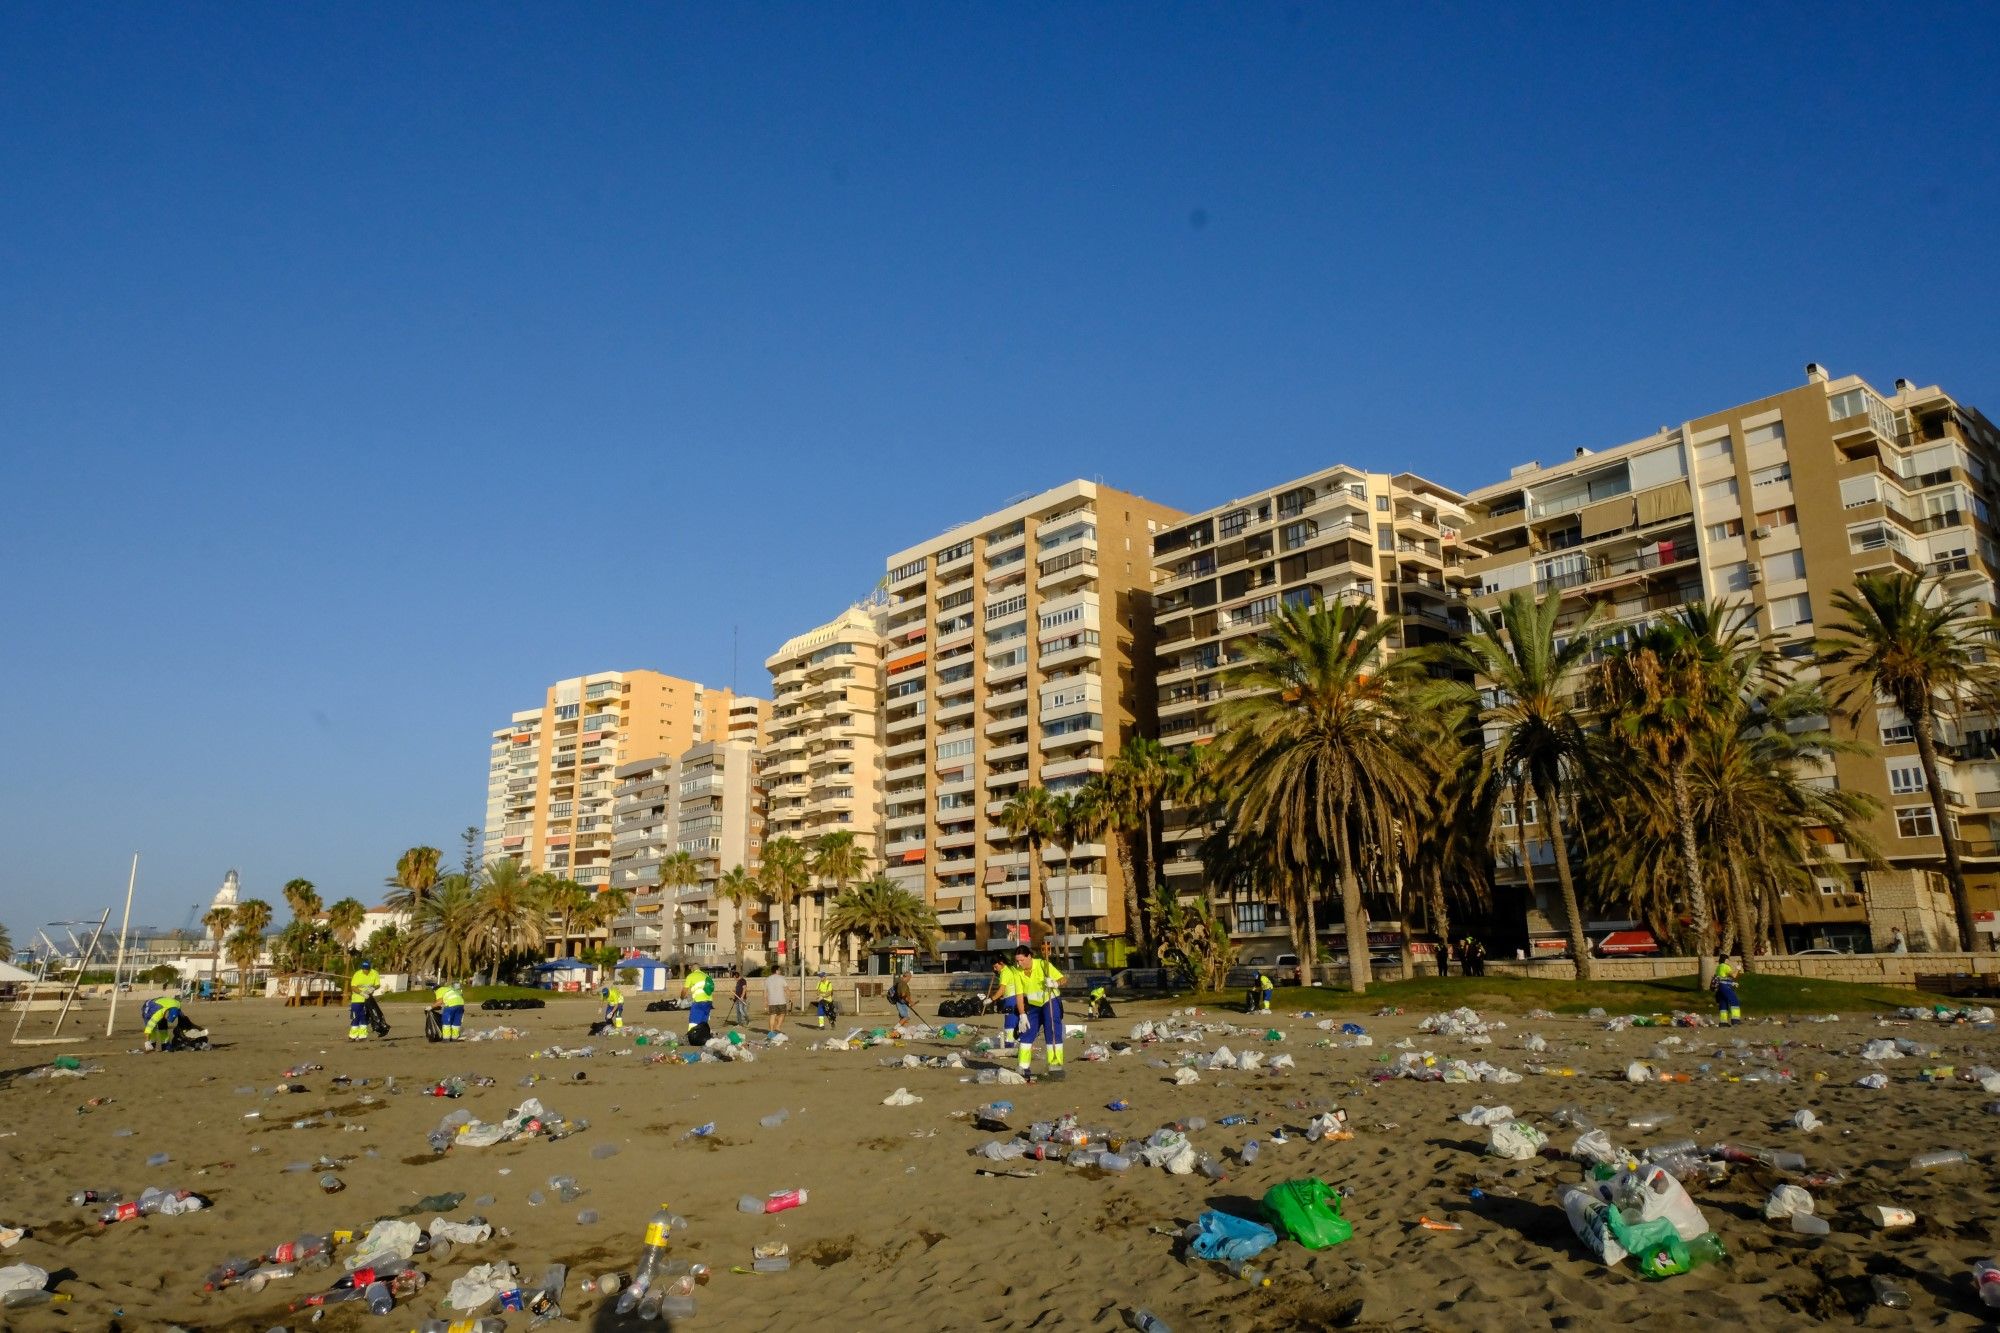 Toneladas de basura se acumulan en la playa tras celebrar la Noche de San Juan